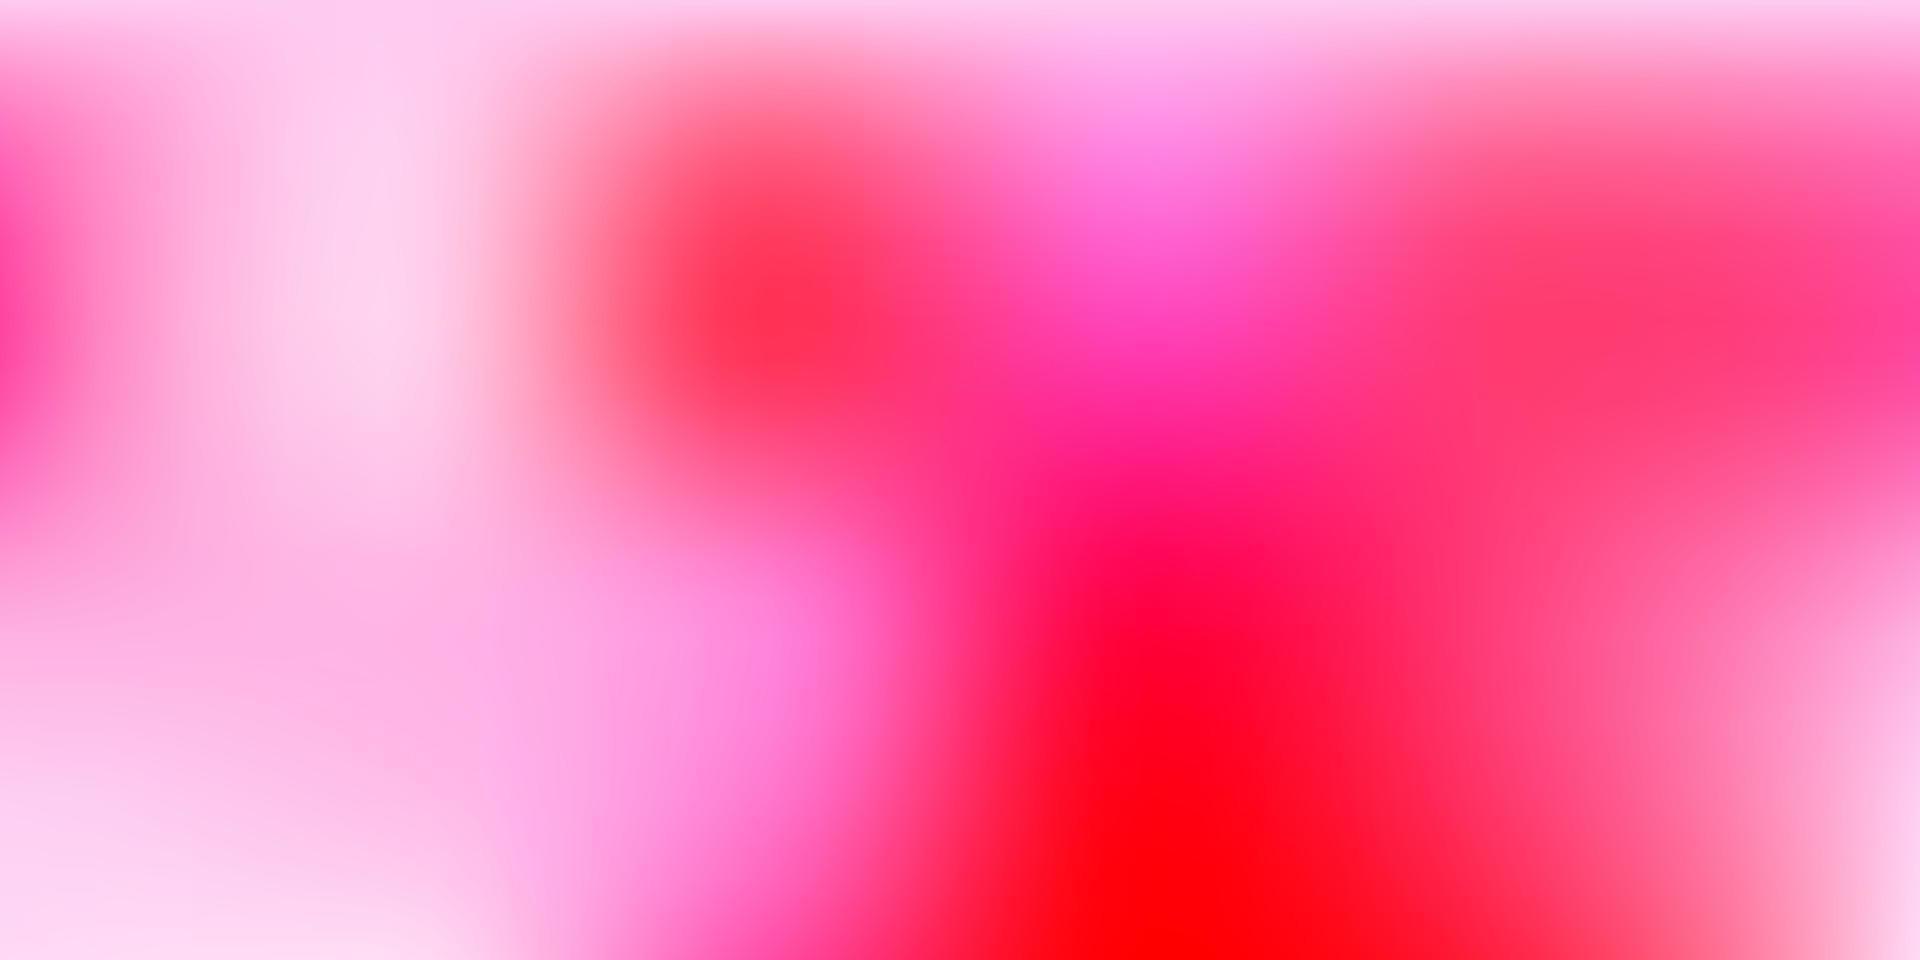 layout de borrão gradiente de vetor rosa claro.